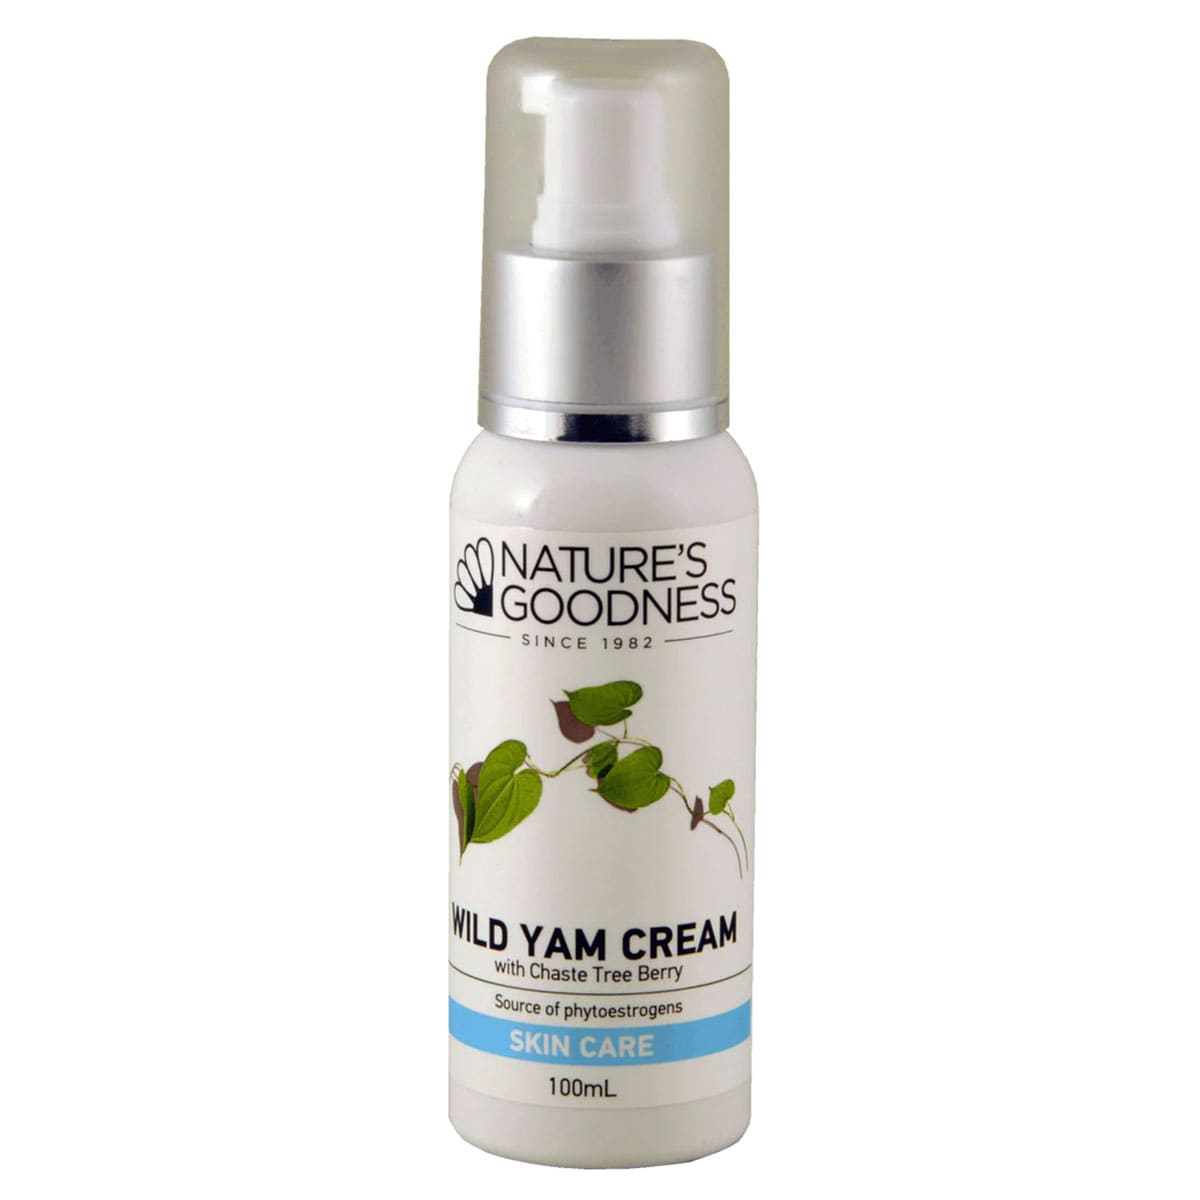 Nature's Goodness Wild Yam Cream with Chaste Tree Berry 100ml